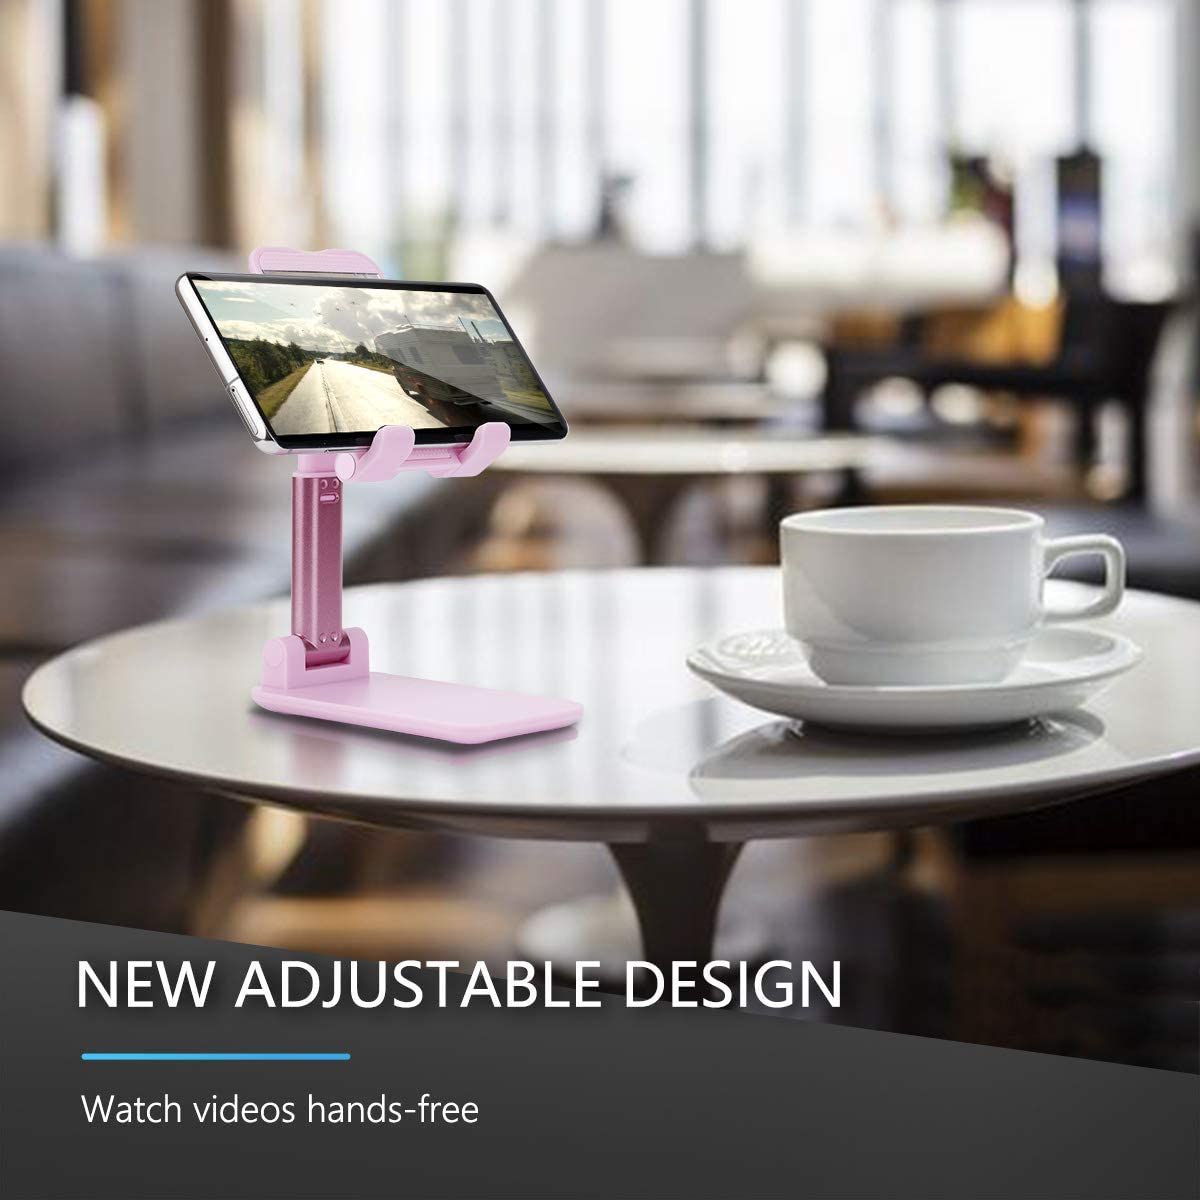 Premium Smart Foldable Mobile & Tablet Stand Universal Phone Holder (Pink)